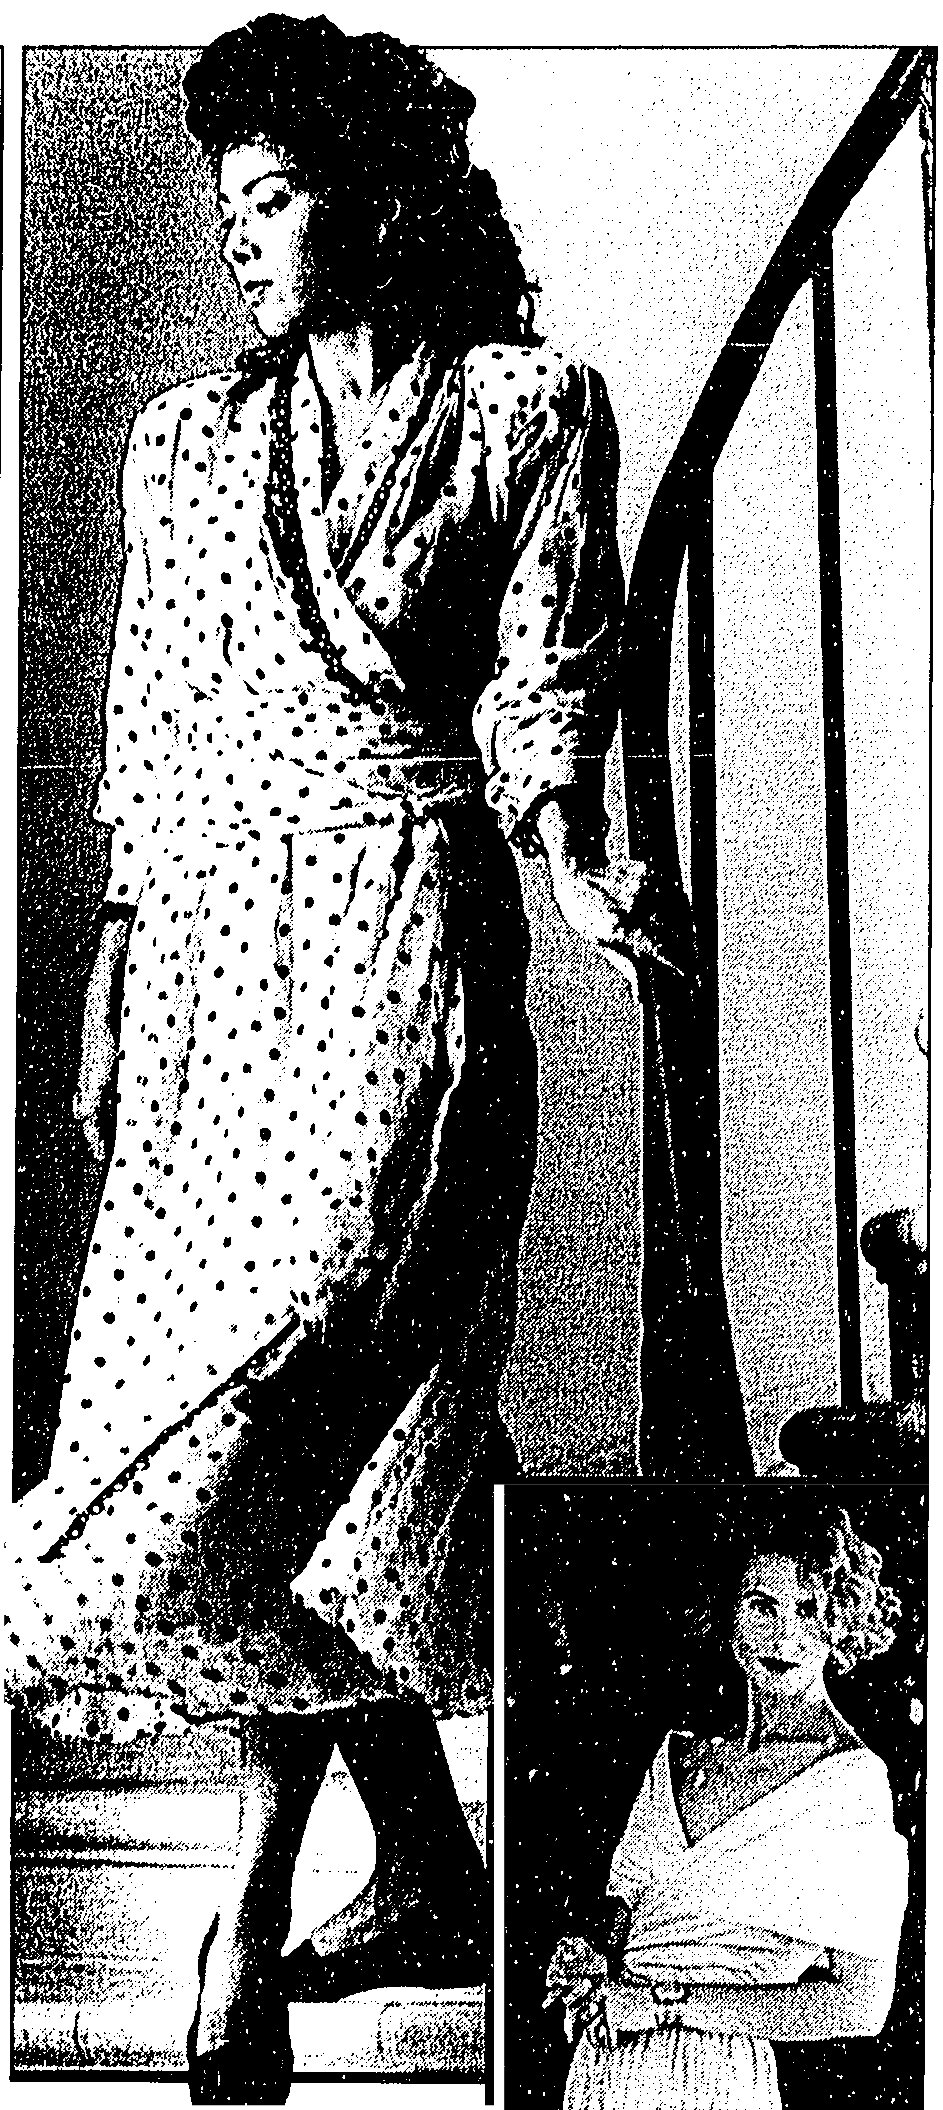 Dress by Tere Tereba. Los Angeles Times, September 29, 1989.